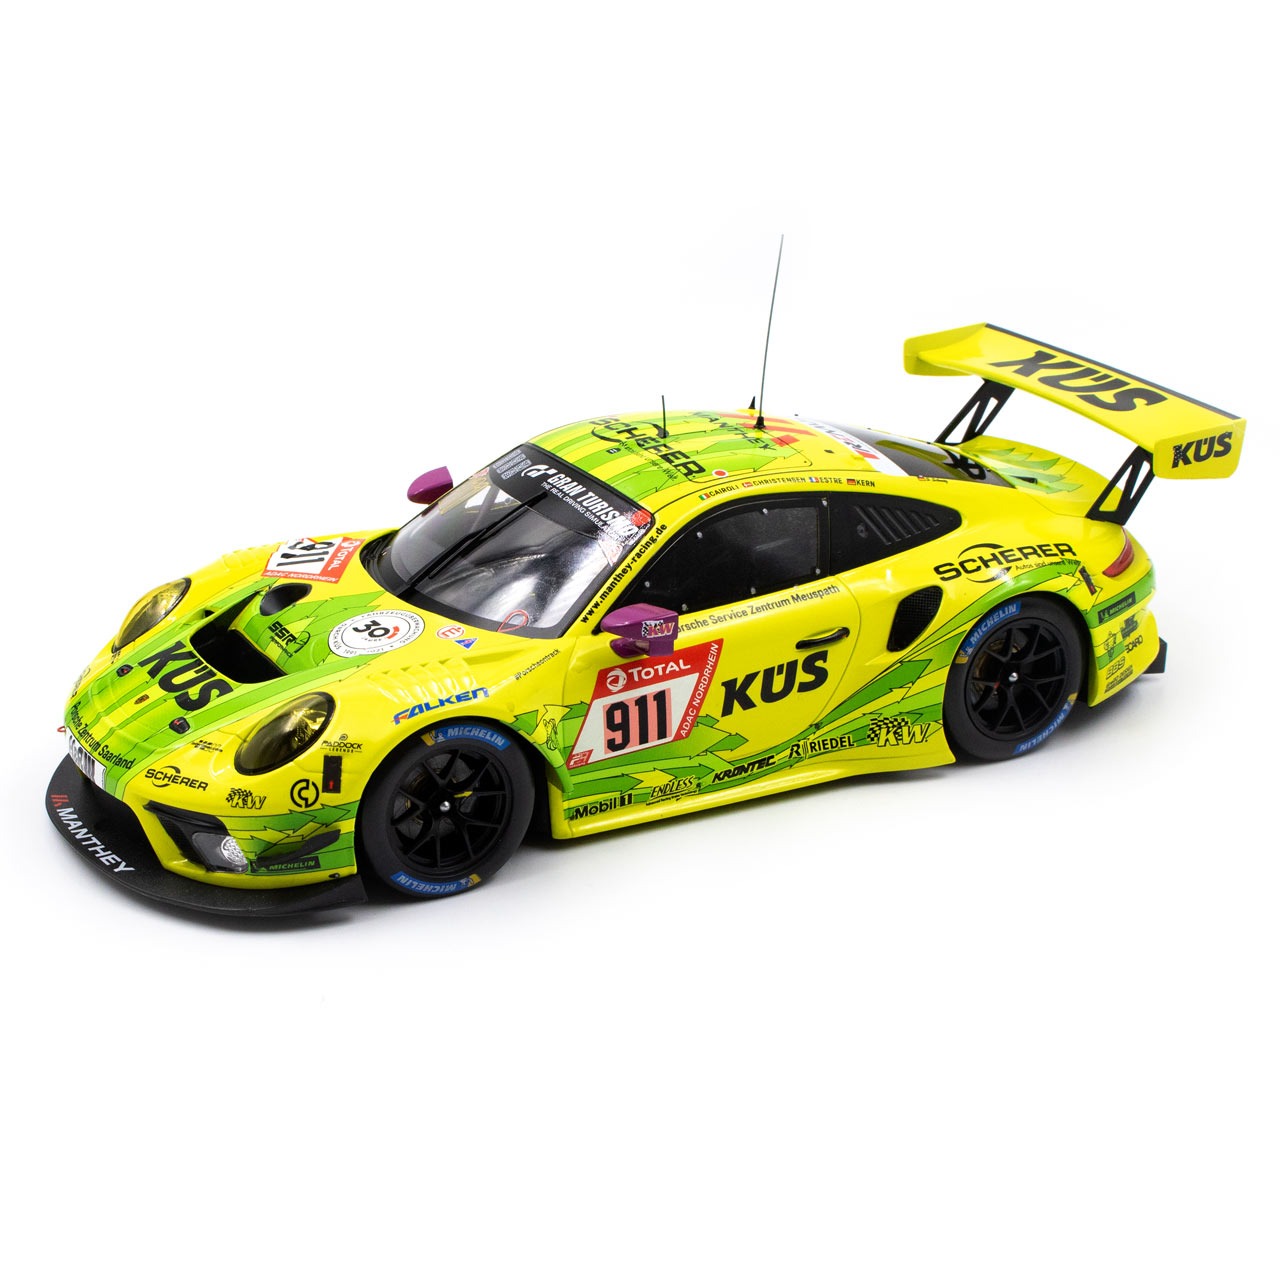 Manthey-Racing Porsche 911 GT3 R - 2021 winner 24h race Nürburgring #911 1:18